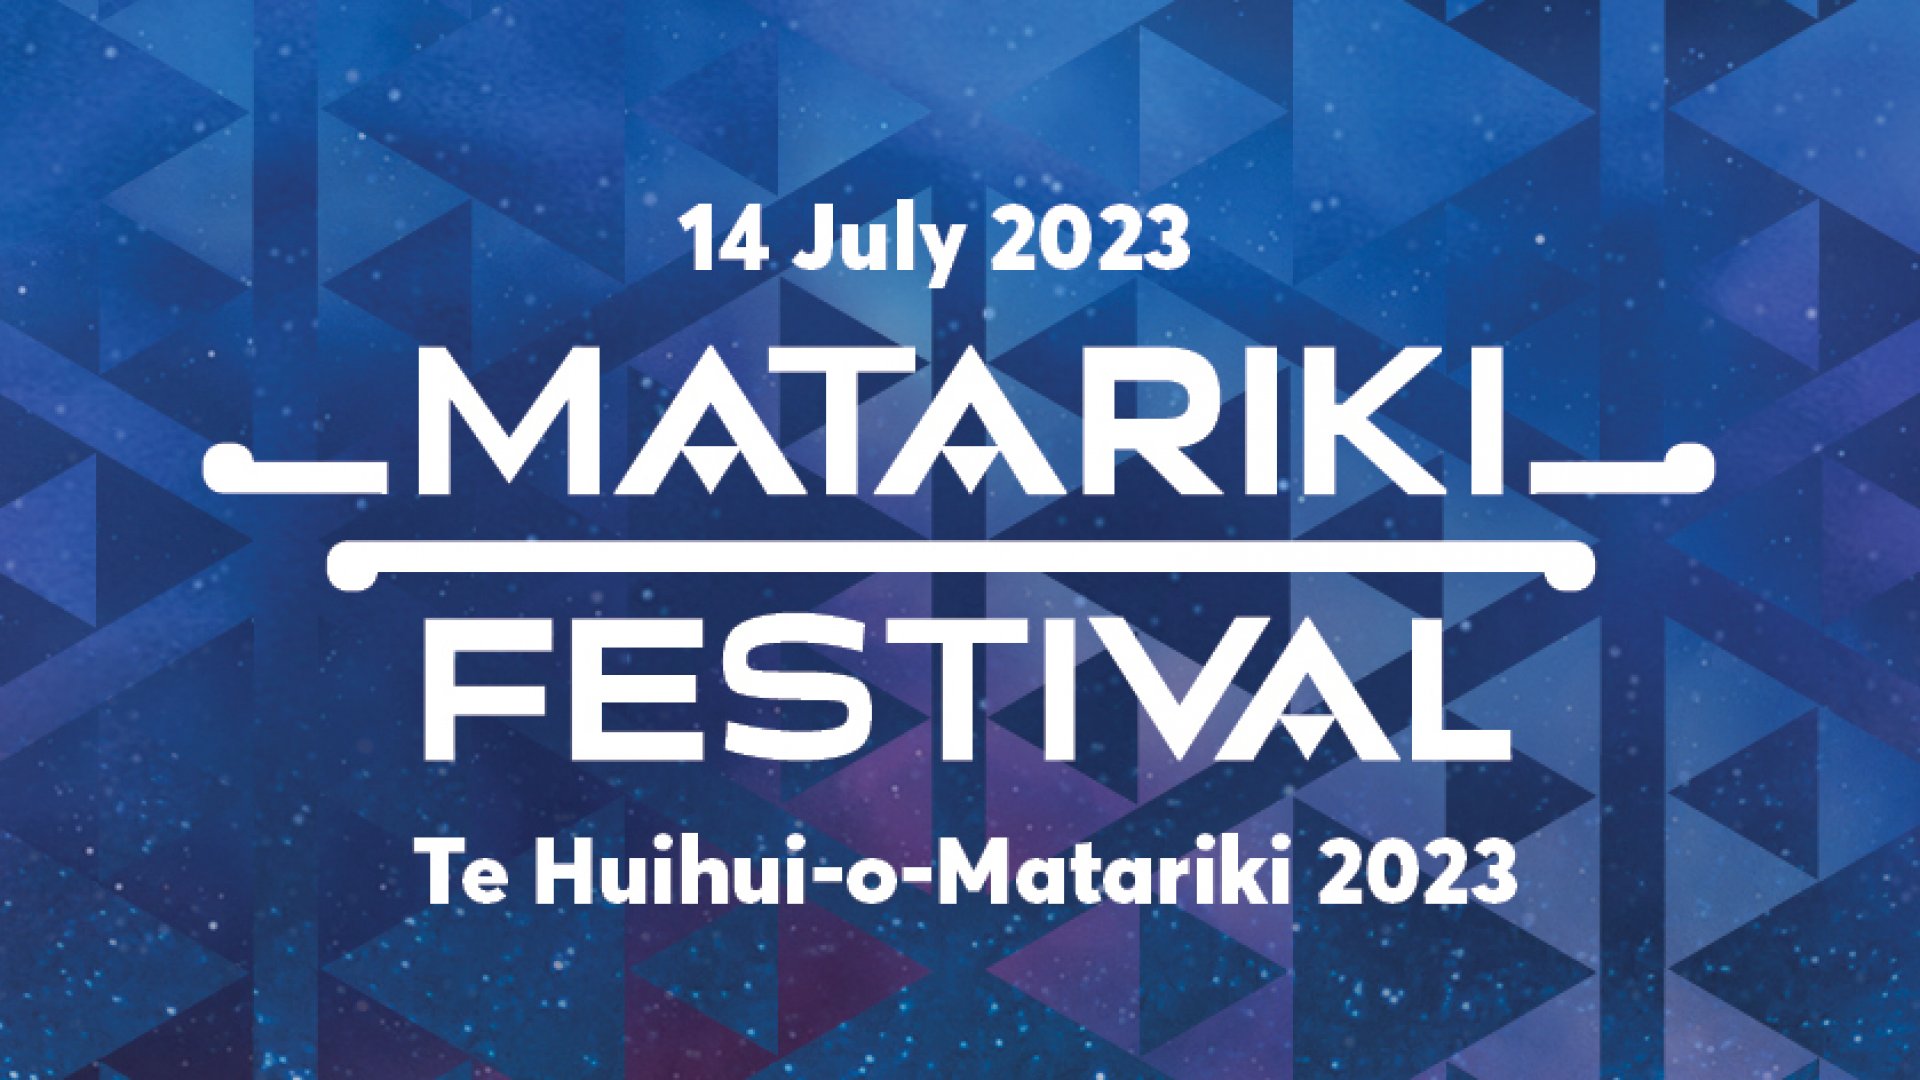 Matariki Festival, Te Huihui-o-Matariki 2023 thumbnail image